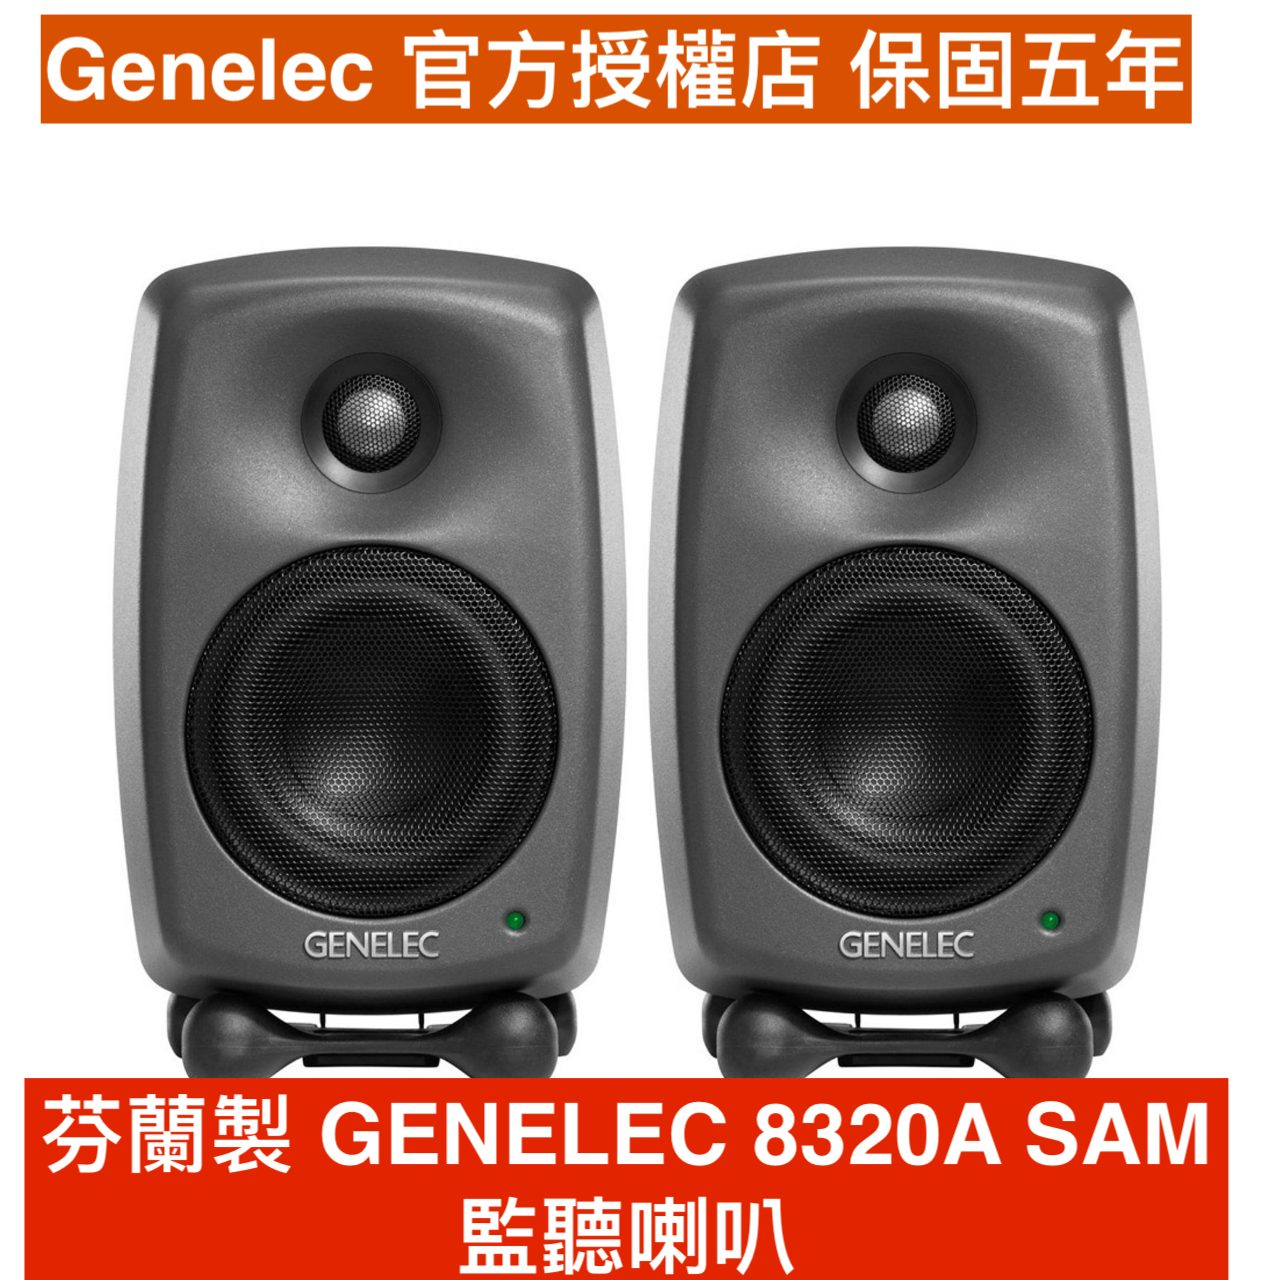 GENELEC 8320A SAM 監聽喇叭 公司貨保5年 加送XLR線 芬蘭製